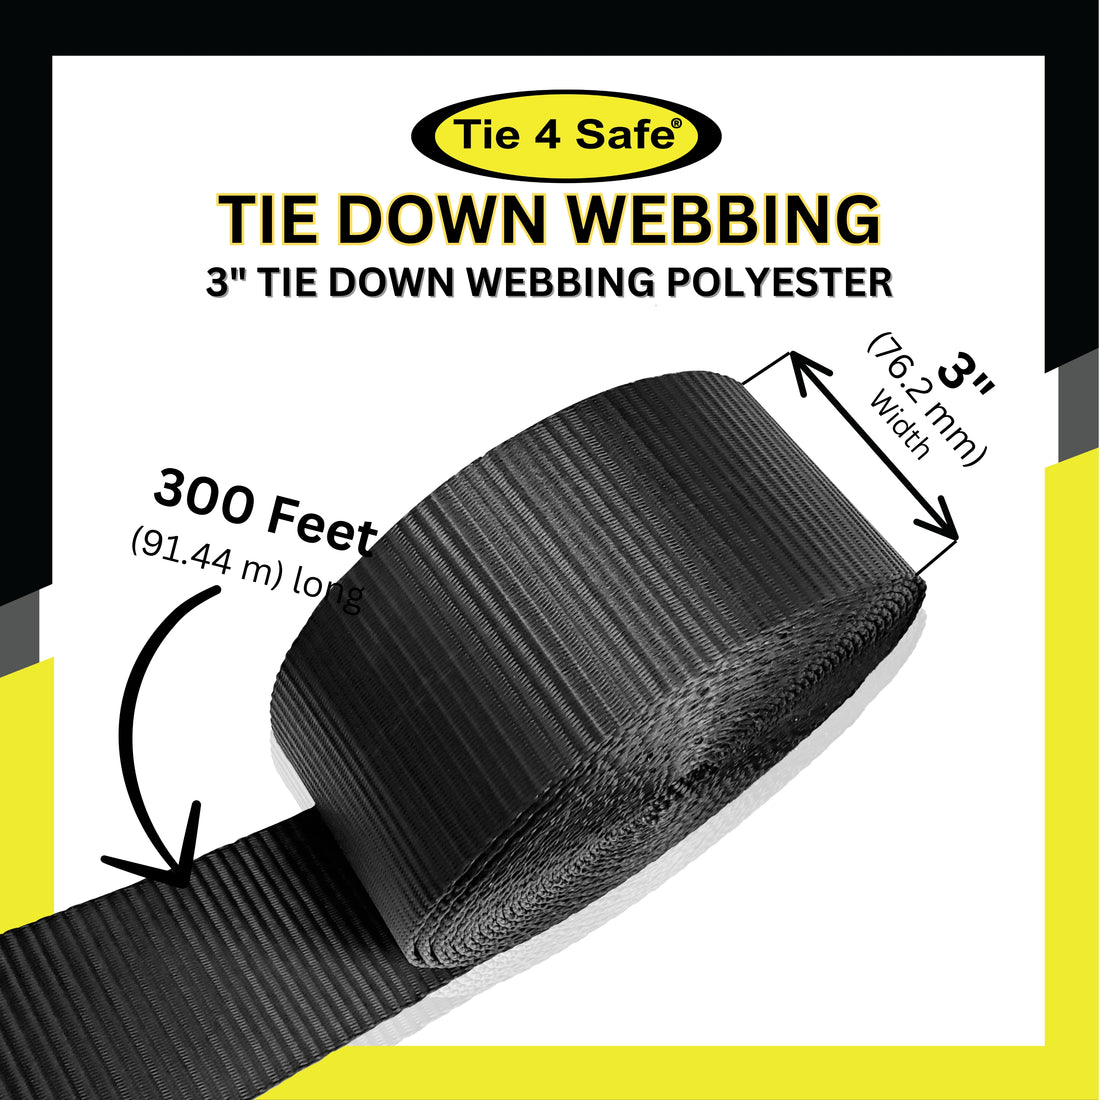 3" Tie Down Webbing Polyester